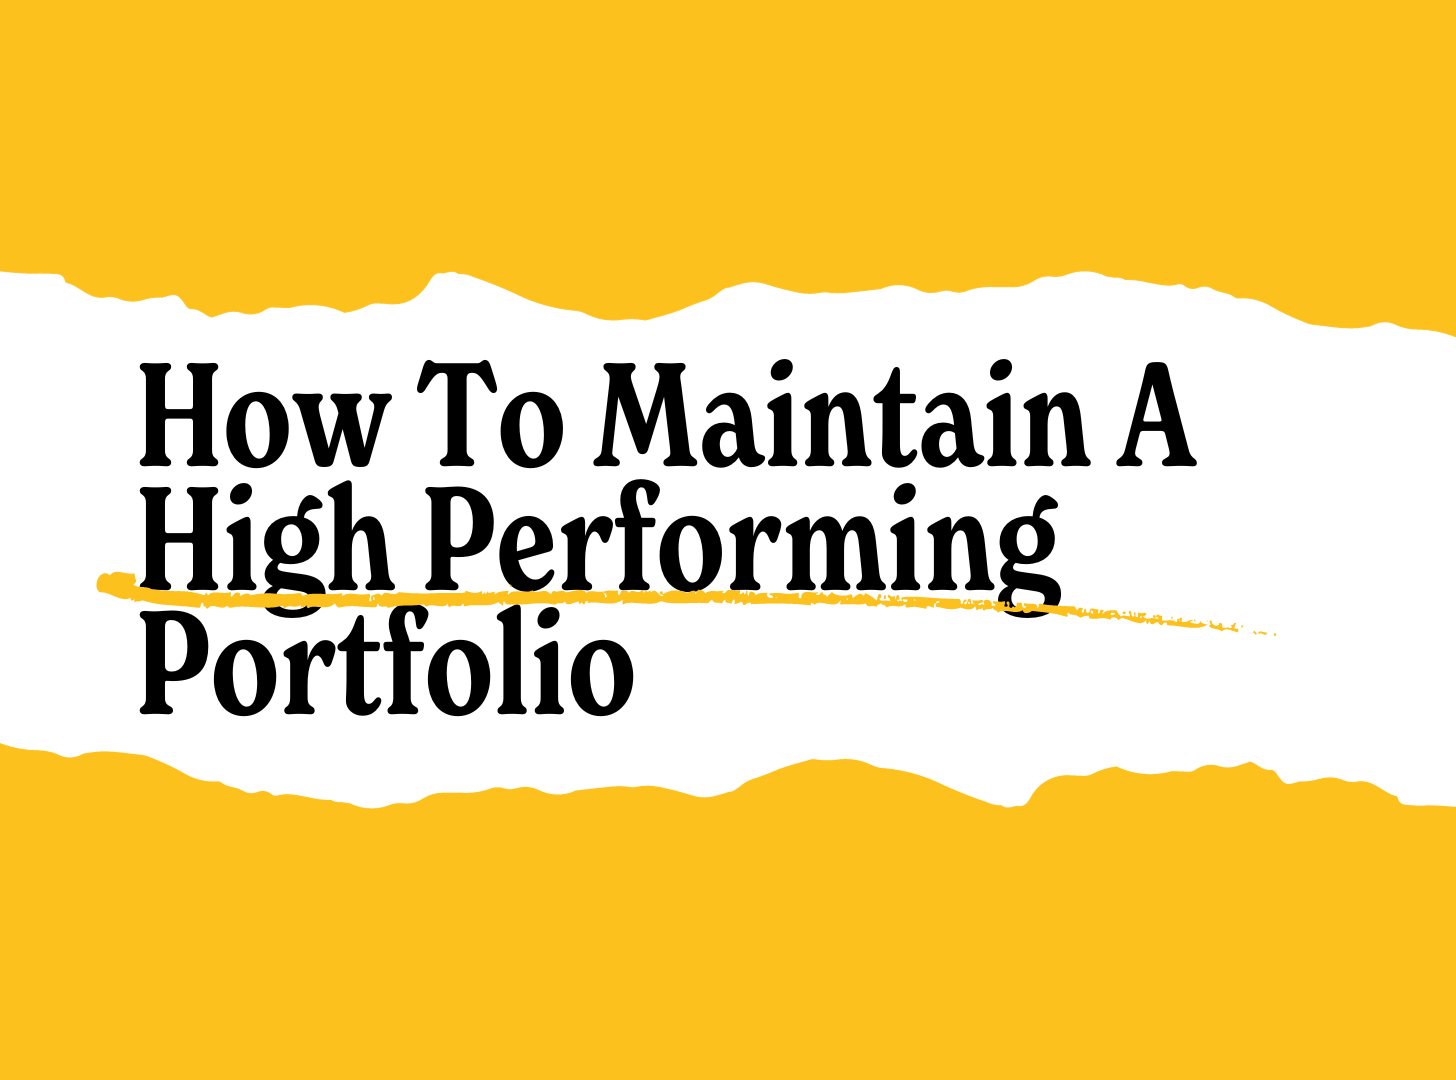 How To Maintain A High Performing Portfolio